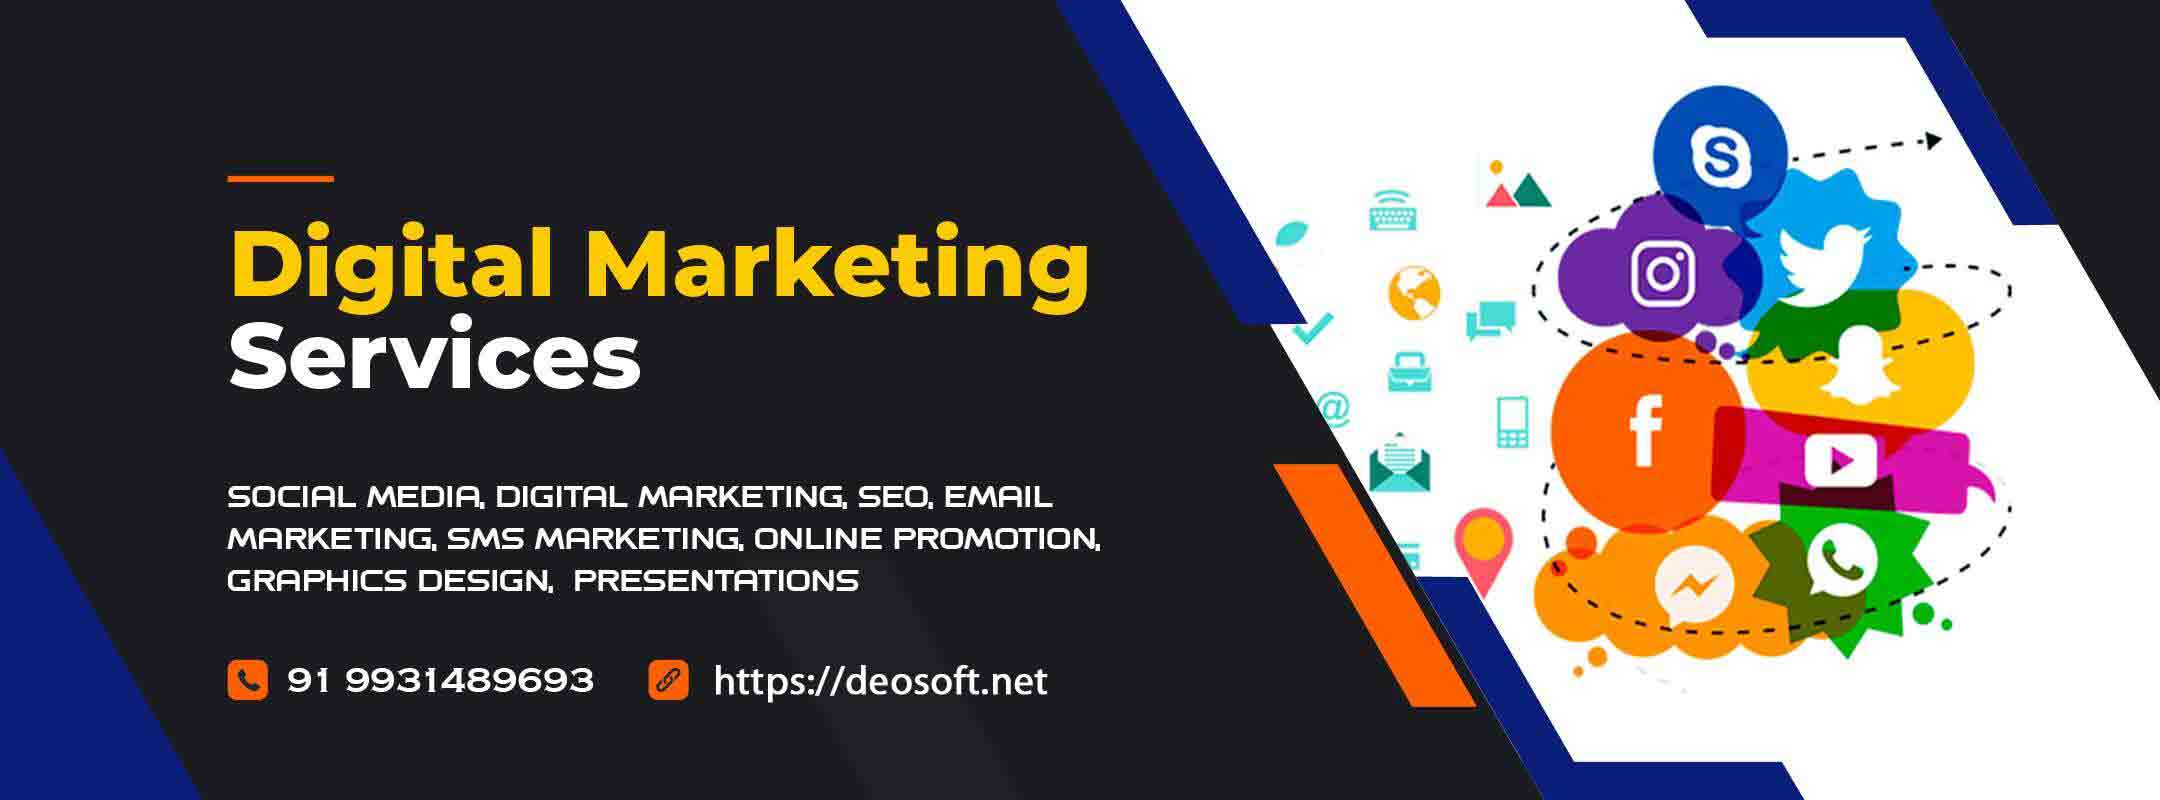 Digital Marketing Services by Deosoft